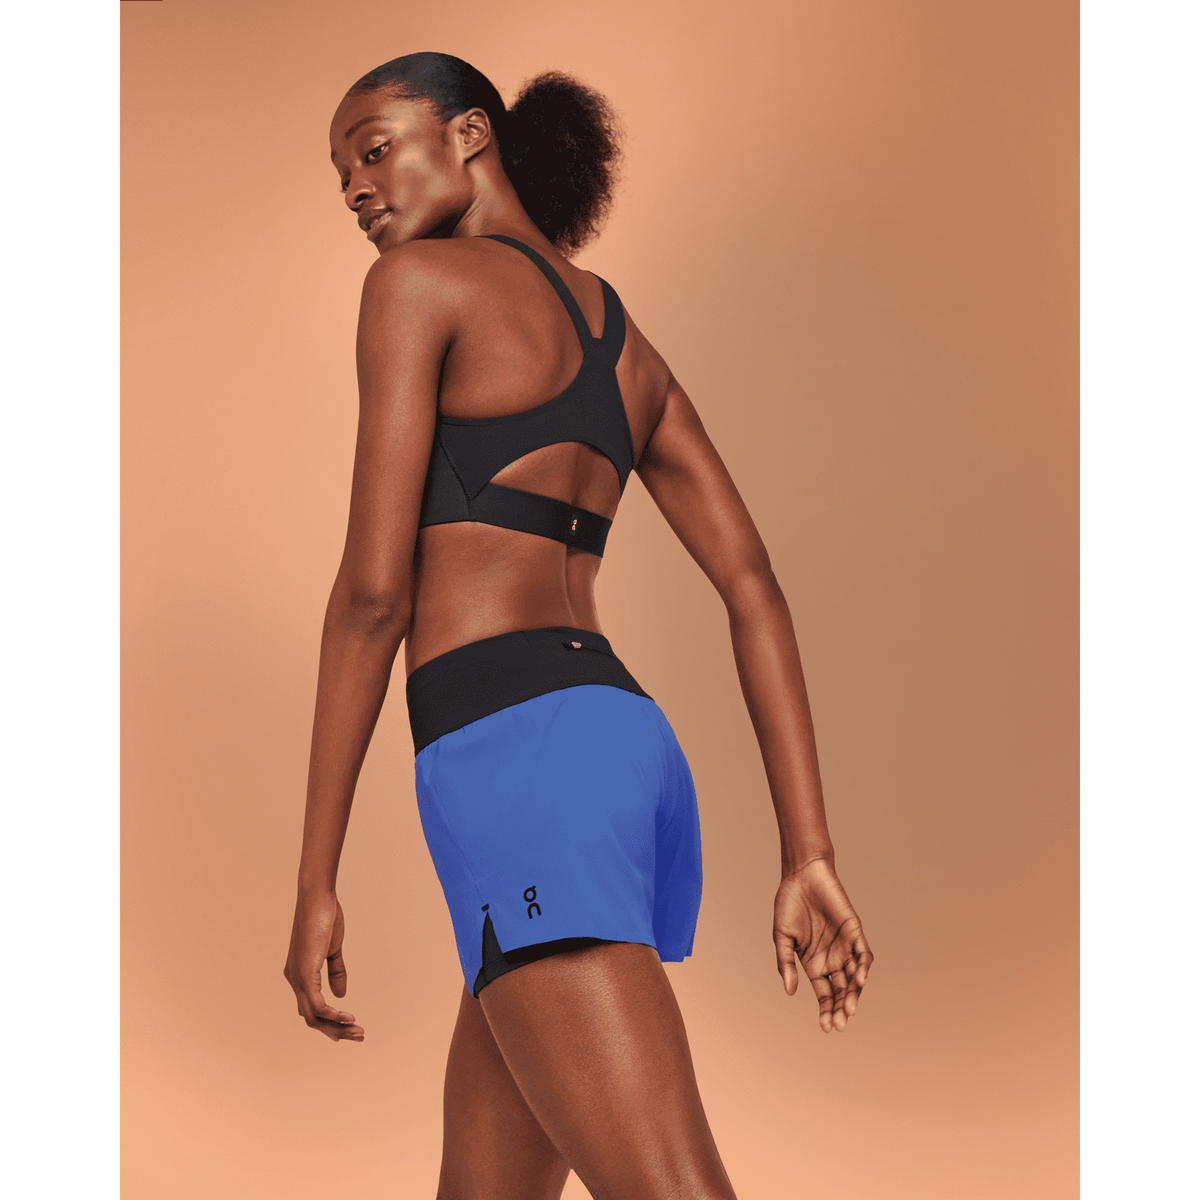 On Running Shorts Womens APPAREL - Womens Shorts 